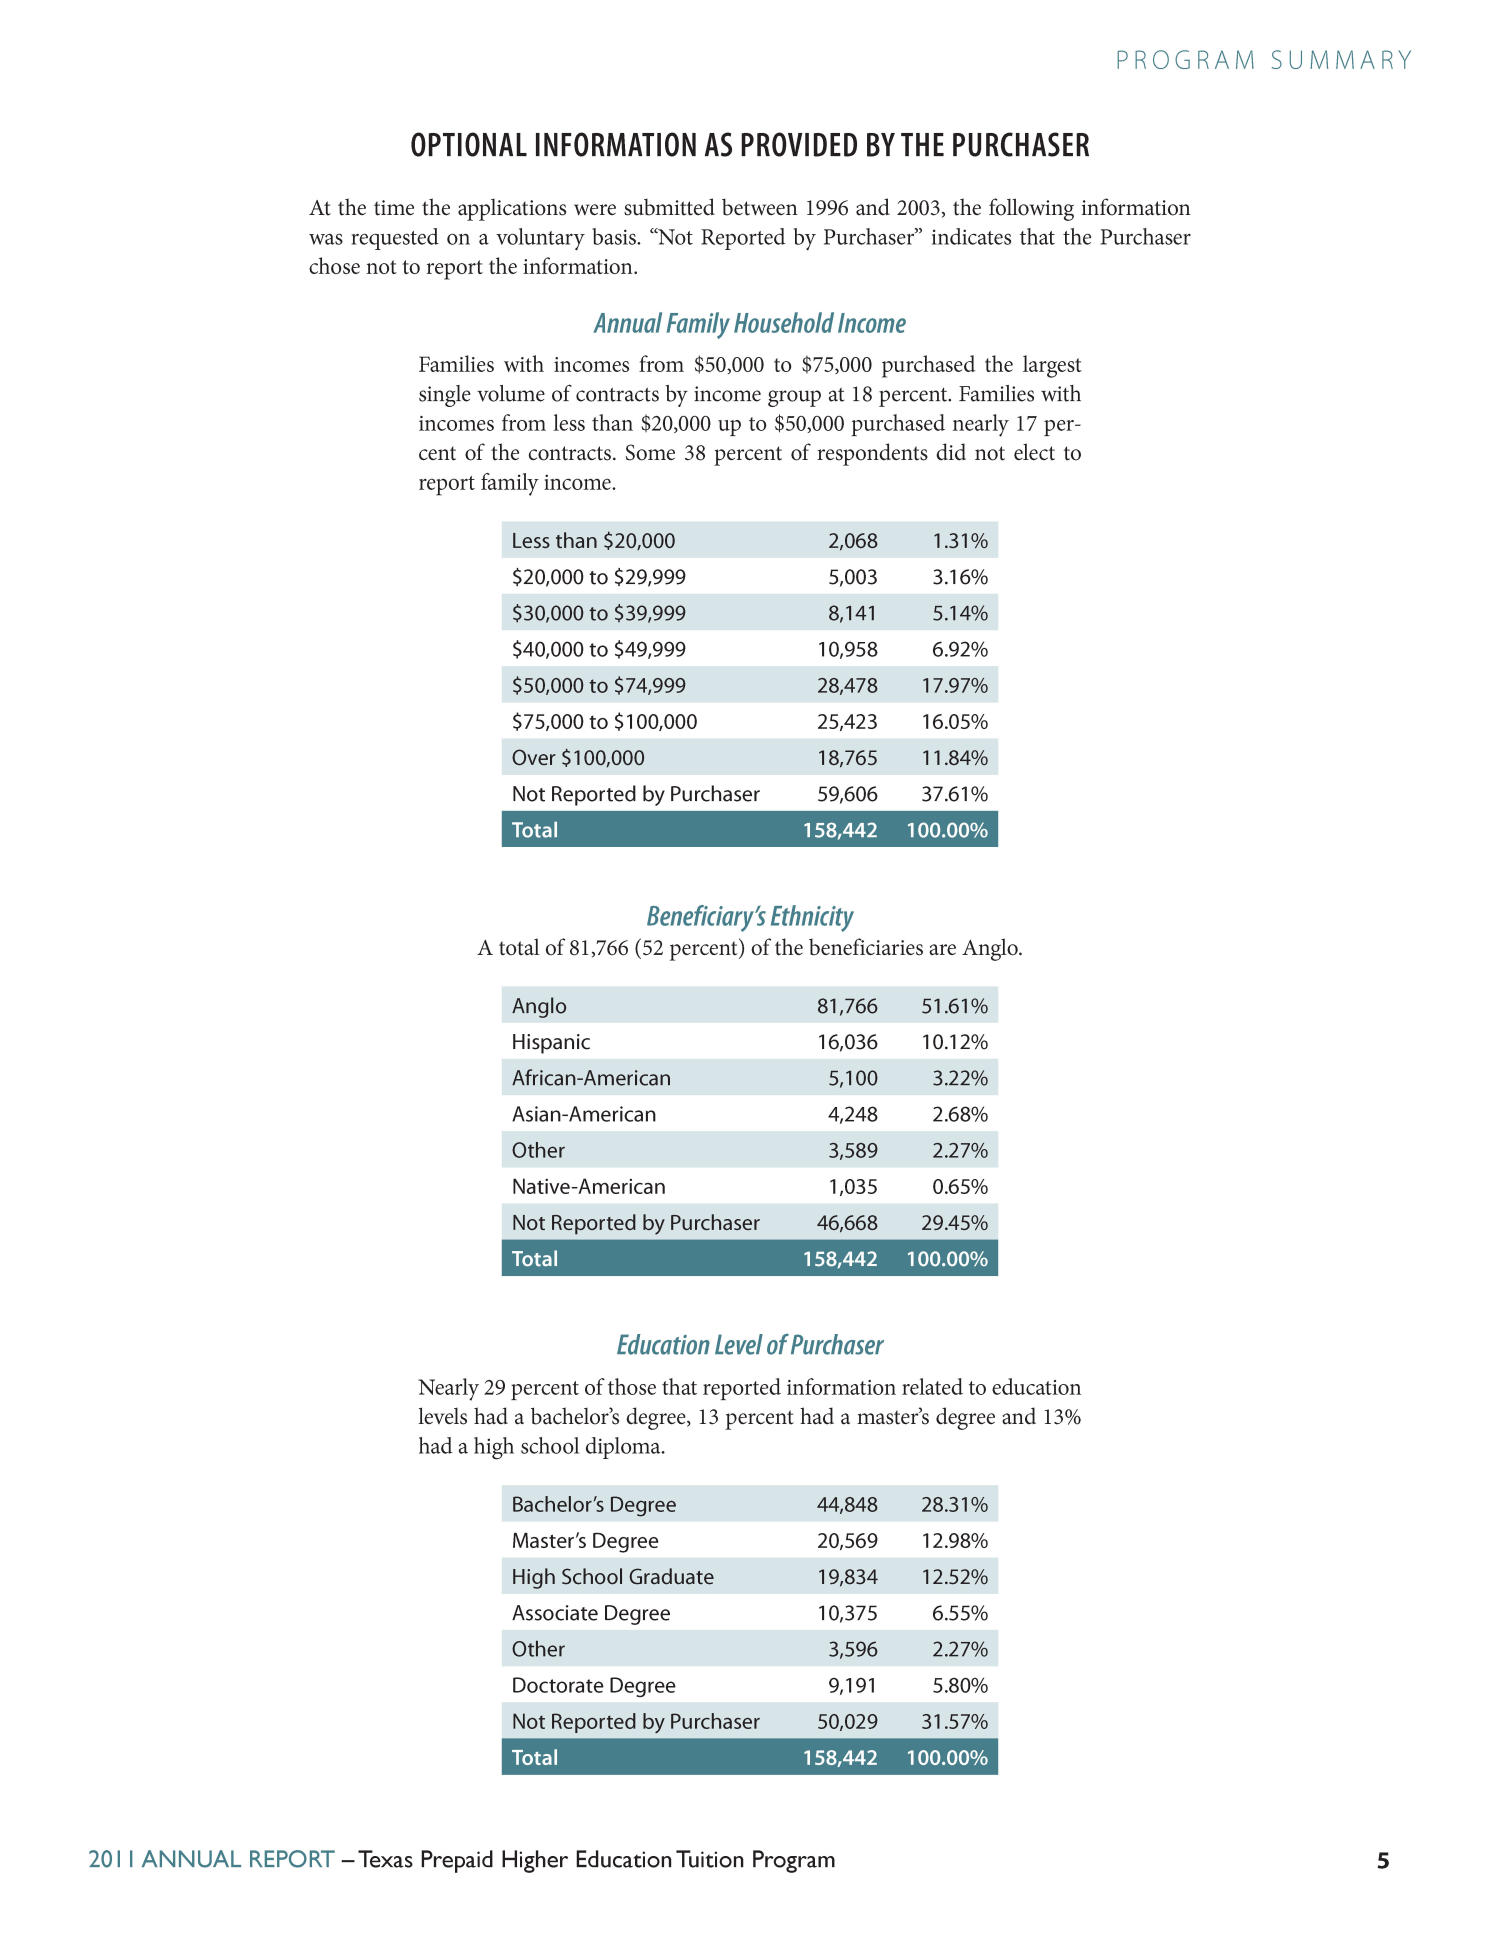 Texas Prepaid Higher Education Tuition Program Annual Report, 2011
                                                
                                                    5
                                                